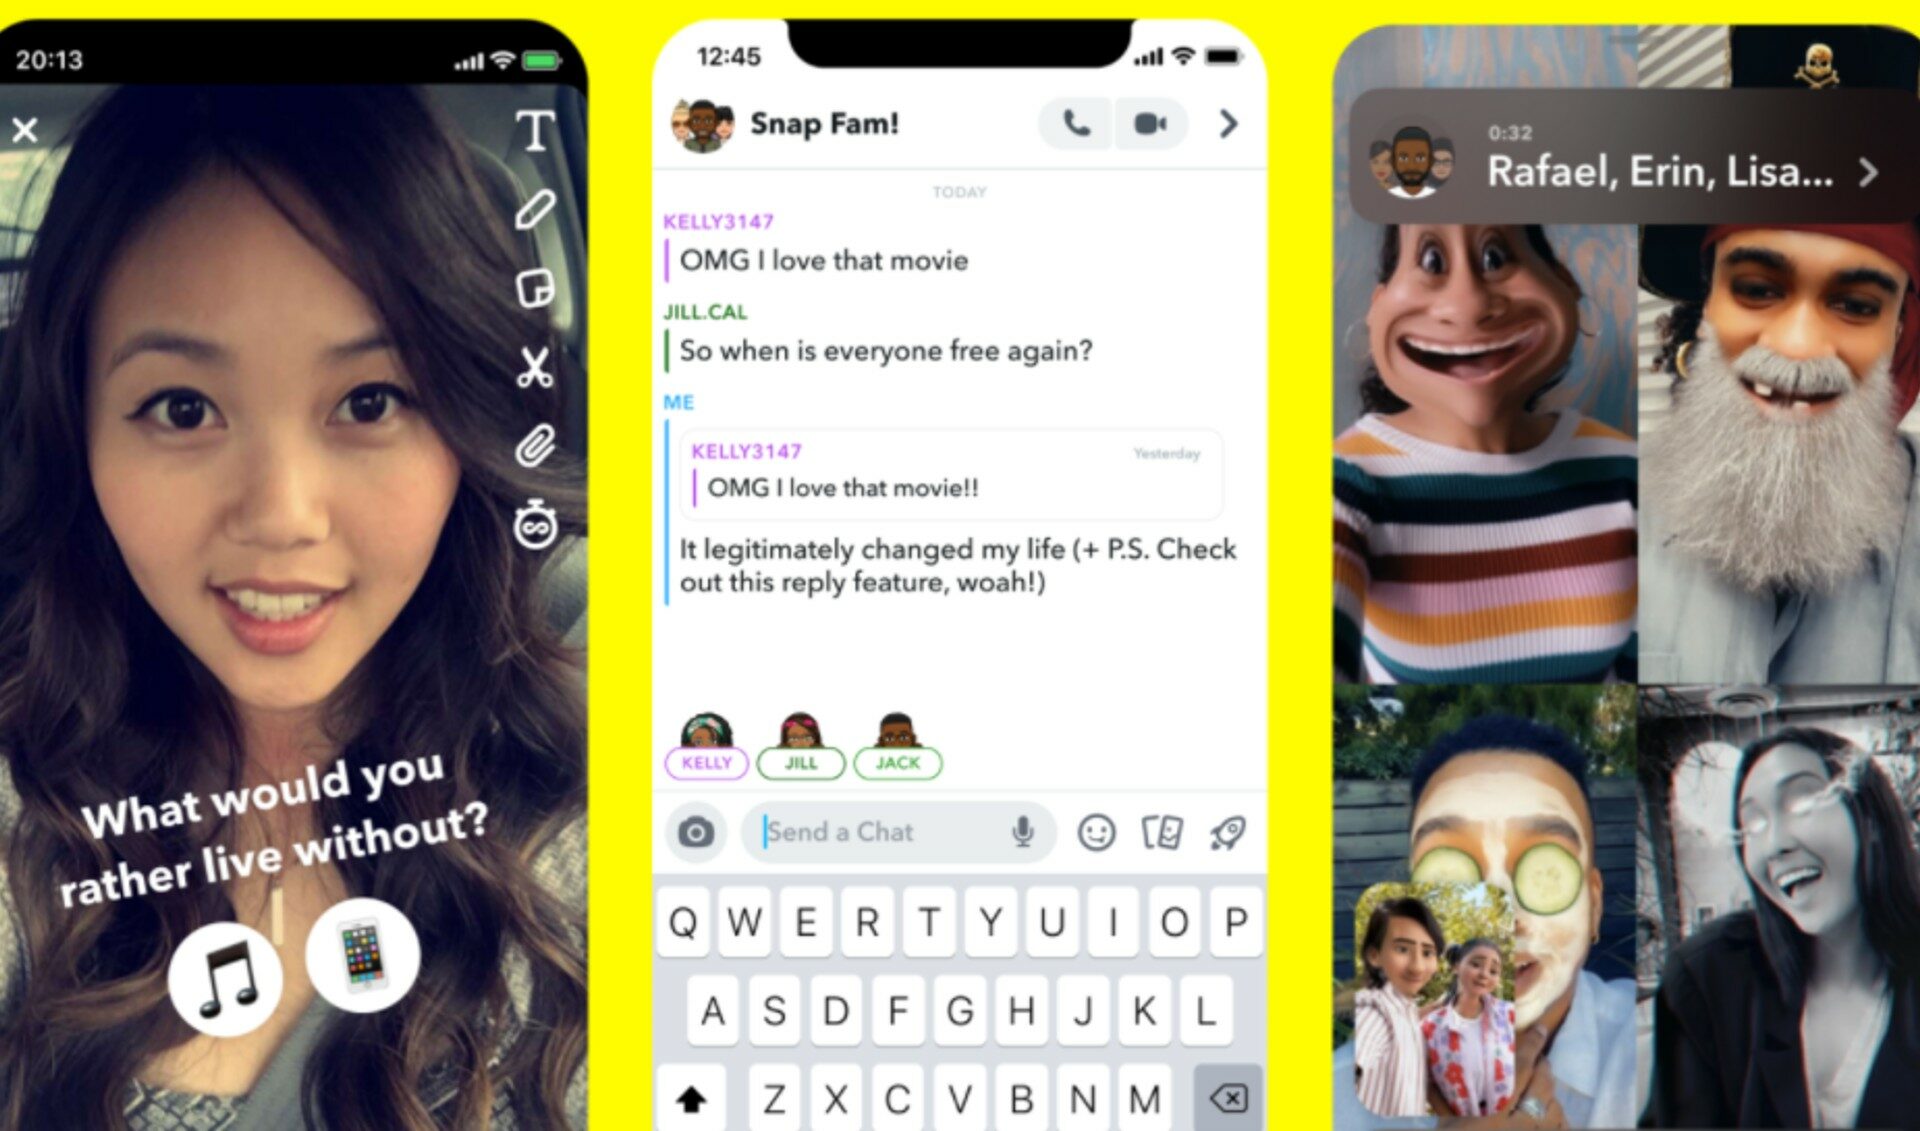 Snapchat Adds Emoji Polls, Bitmoji Reactions To Direct Messaging